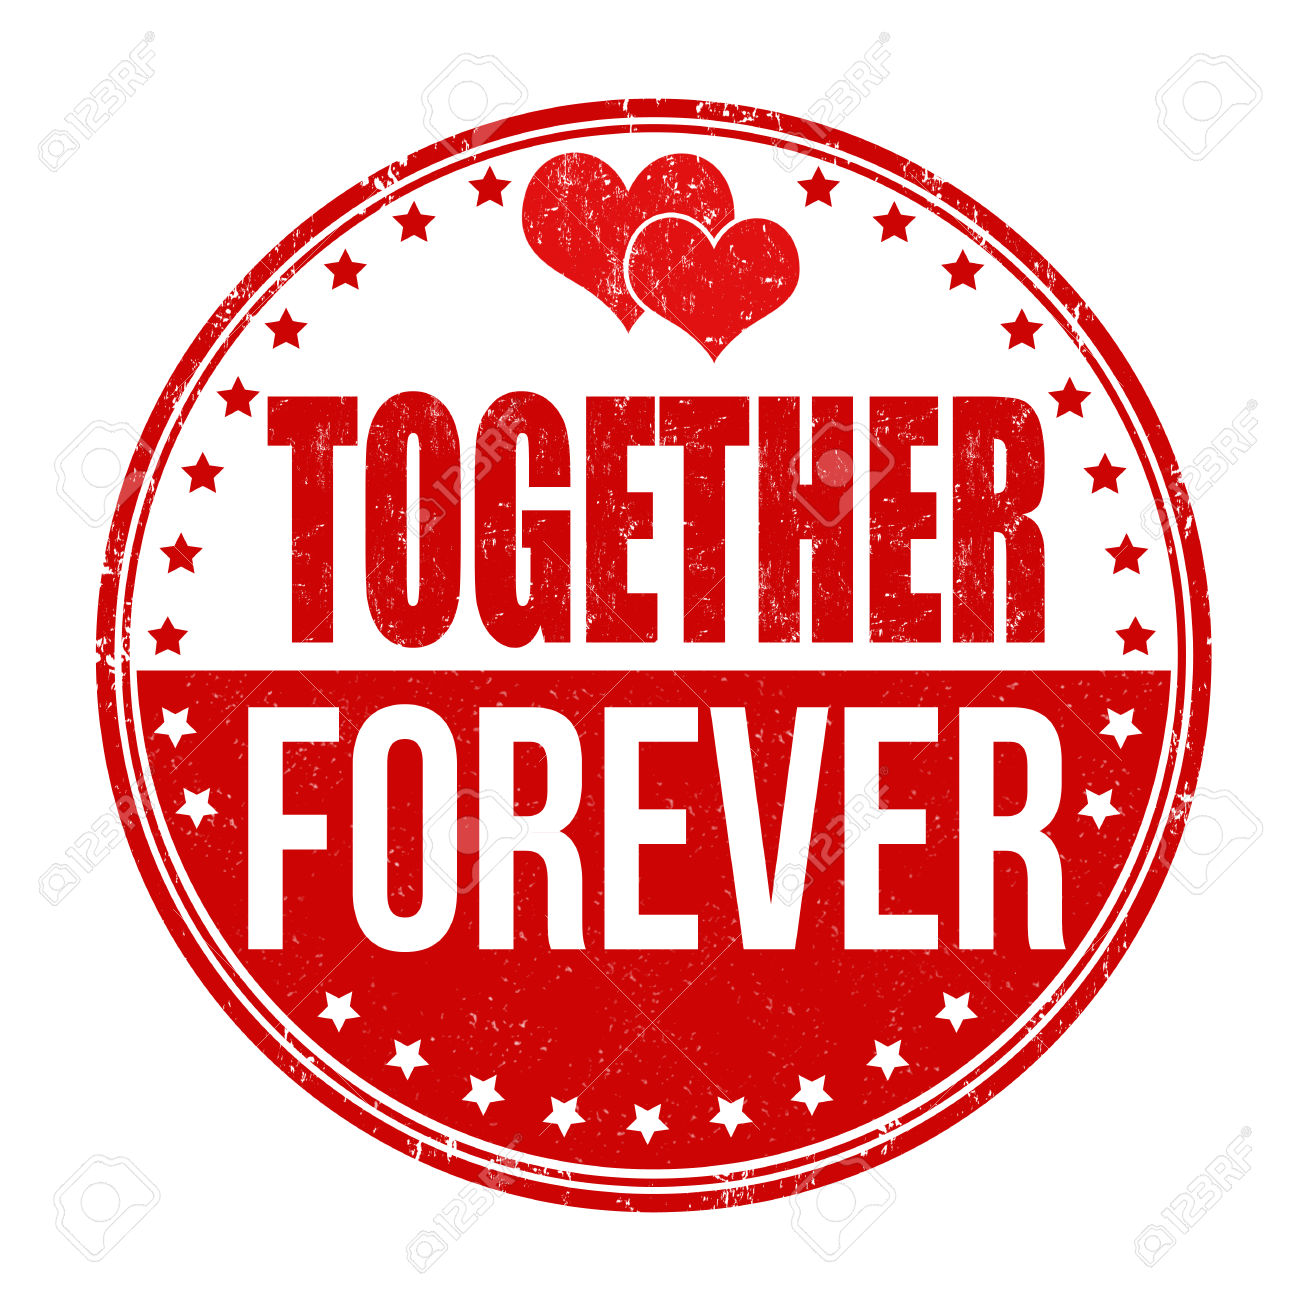 Together Forever Grunge Rubber Stamp On White Background, Vector.